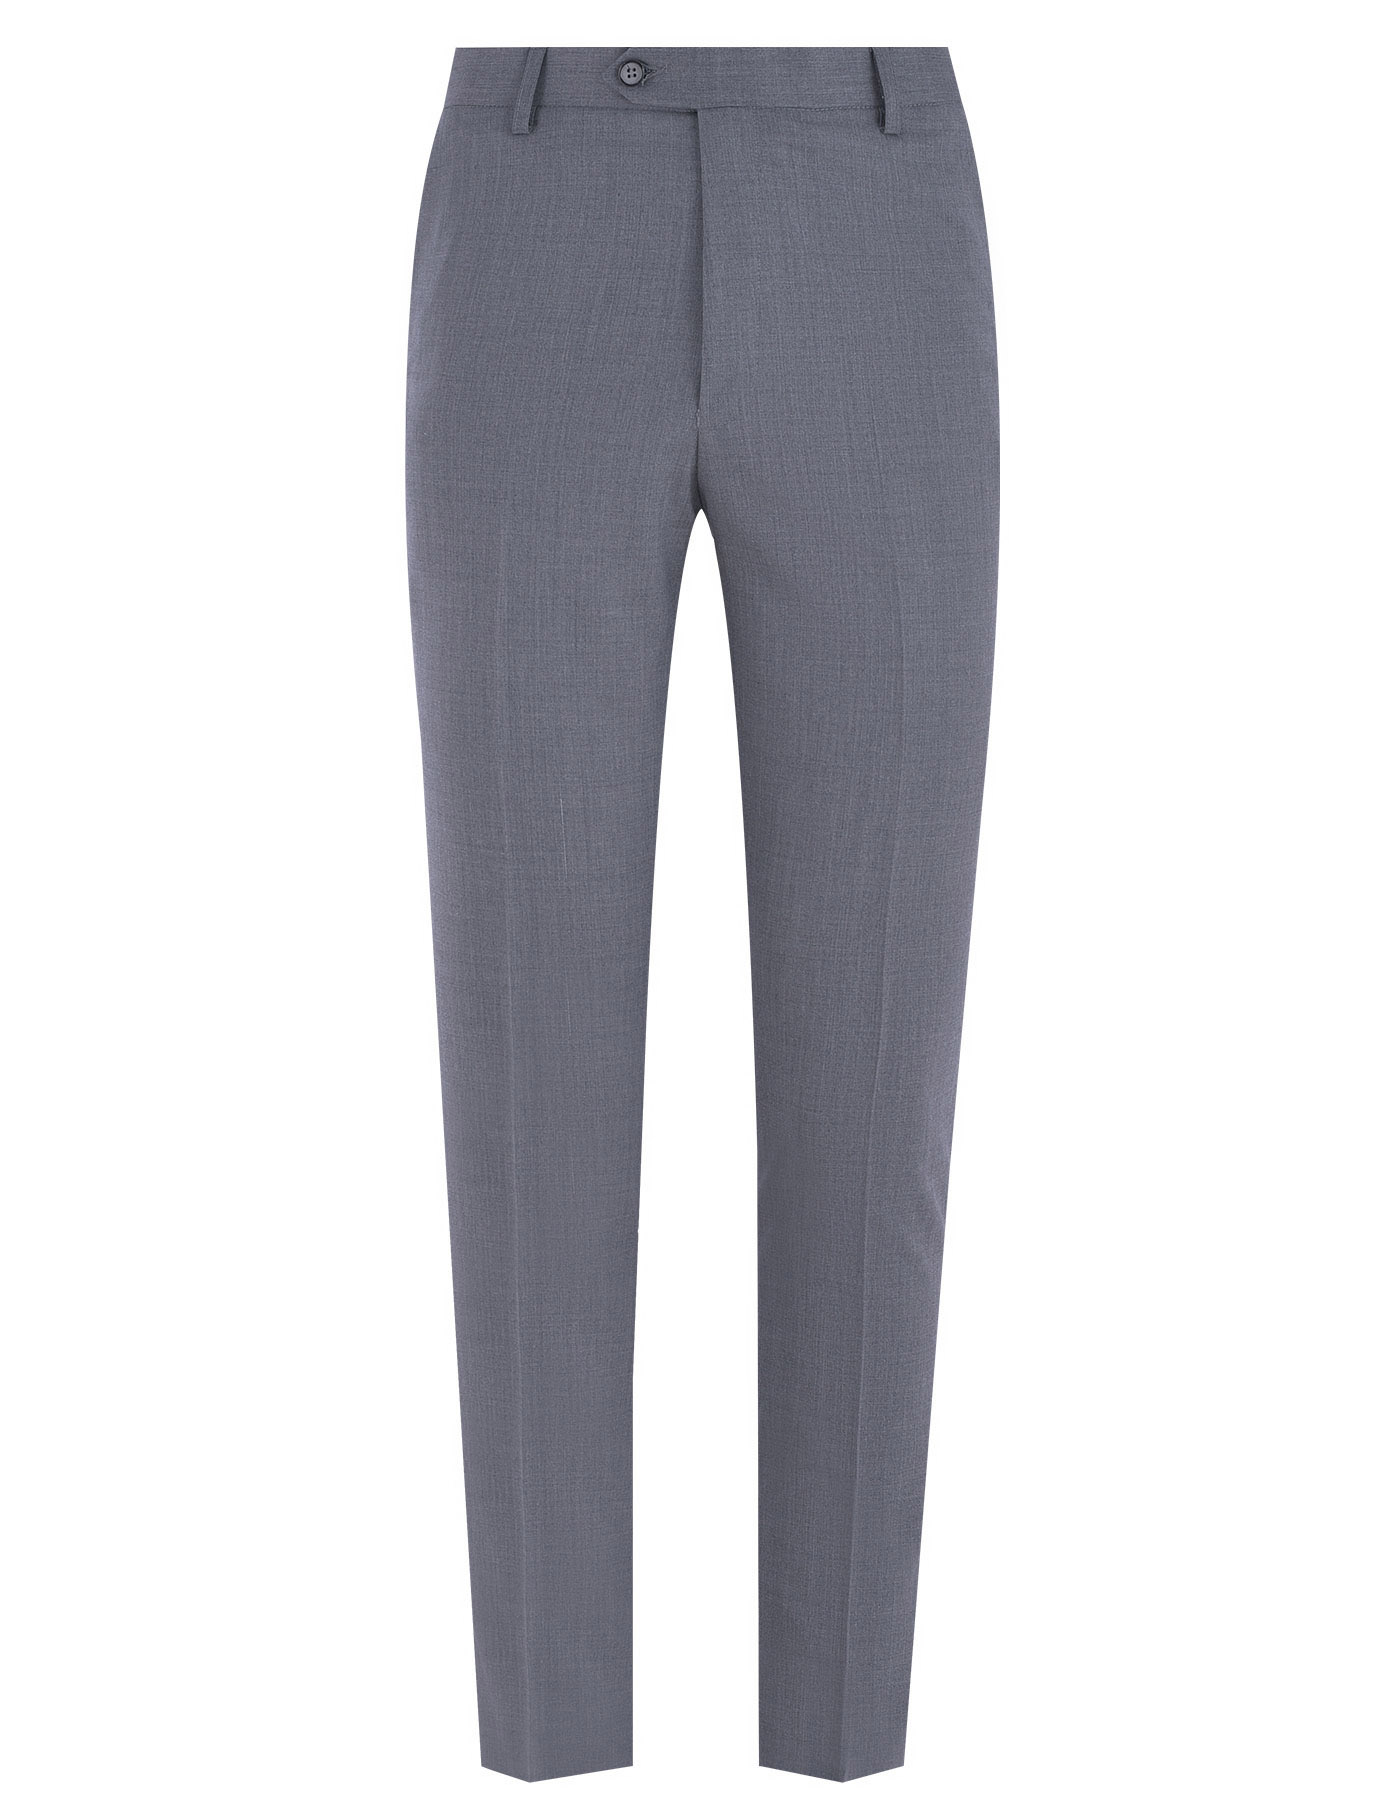 Buy Grey Formal Trouser For Men Online Shopping in Pakistan | Uniworth